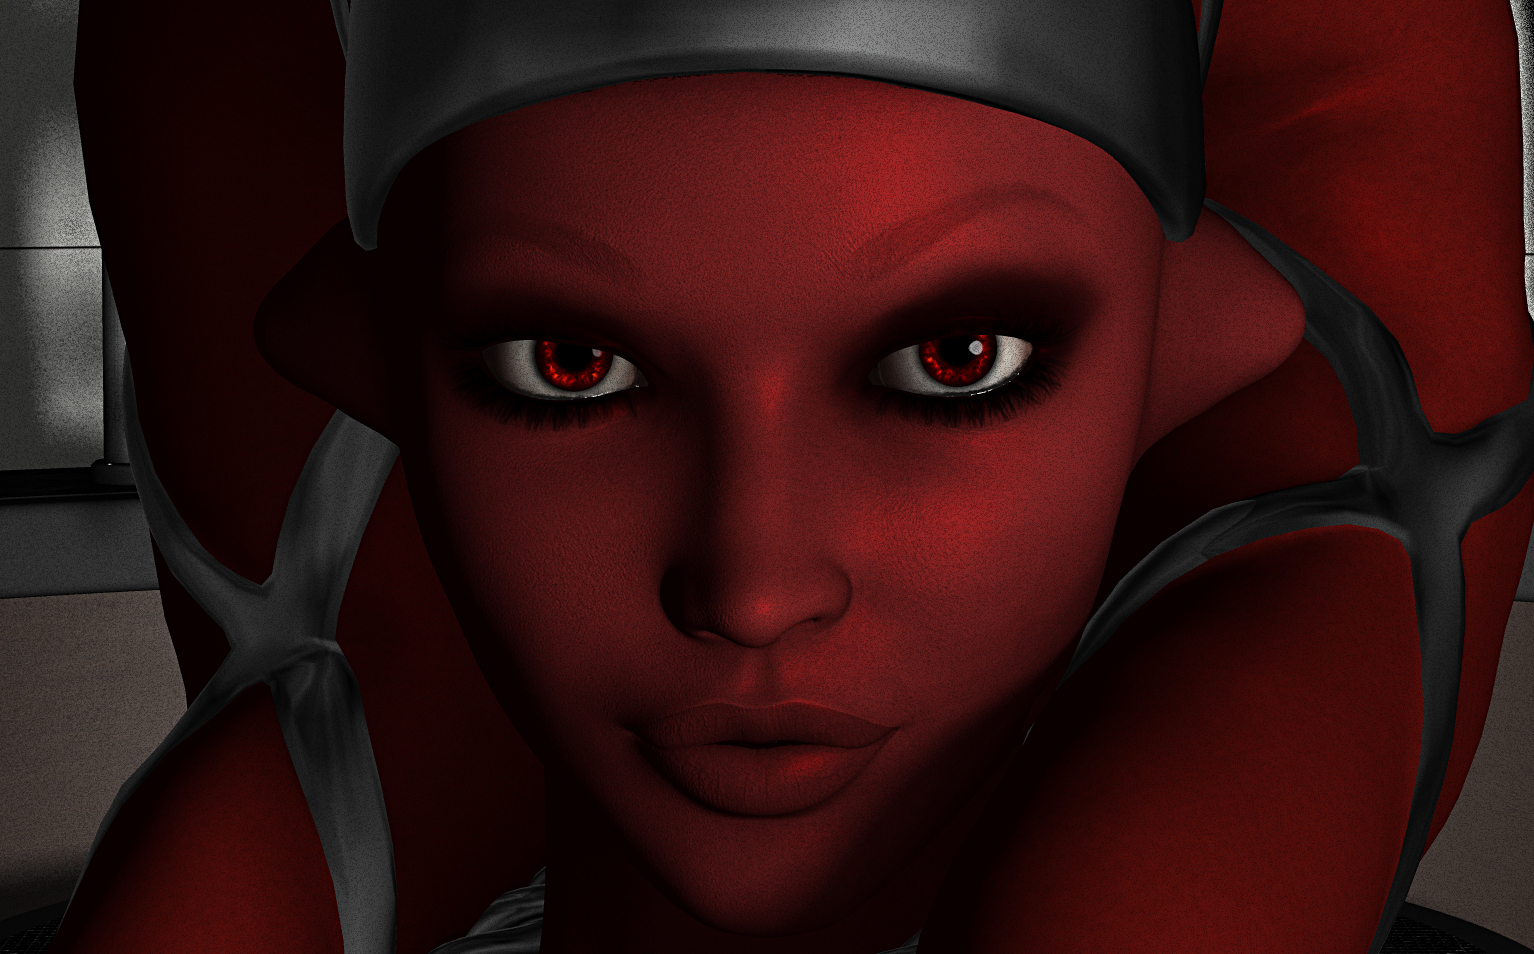 Star Wars Digital Art Twilek Red Skin Closeup Dark Eyes Red Eyes Juicy Lips Artwork Fan Art 1534x954